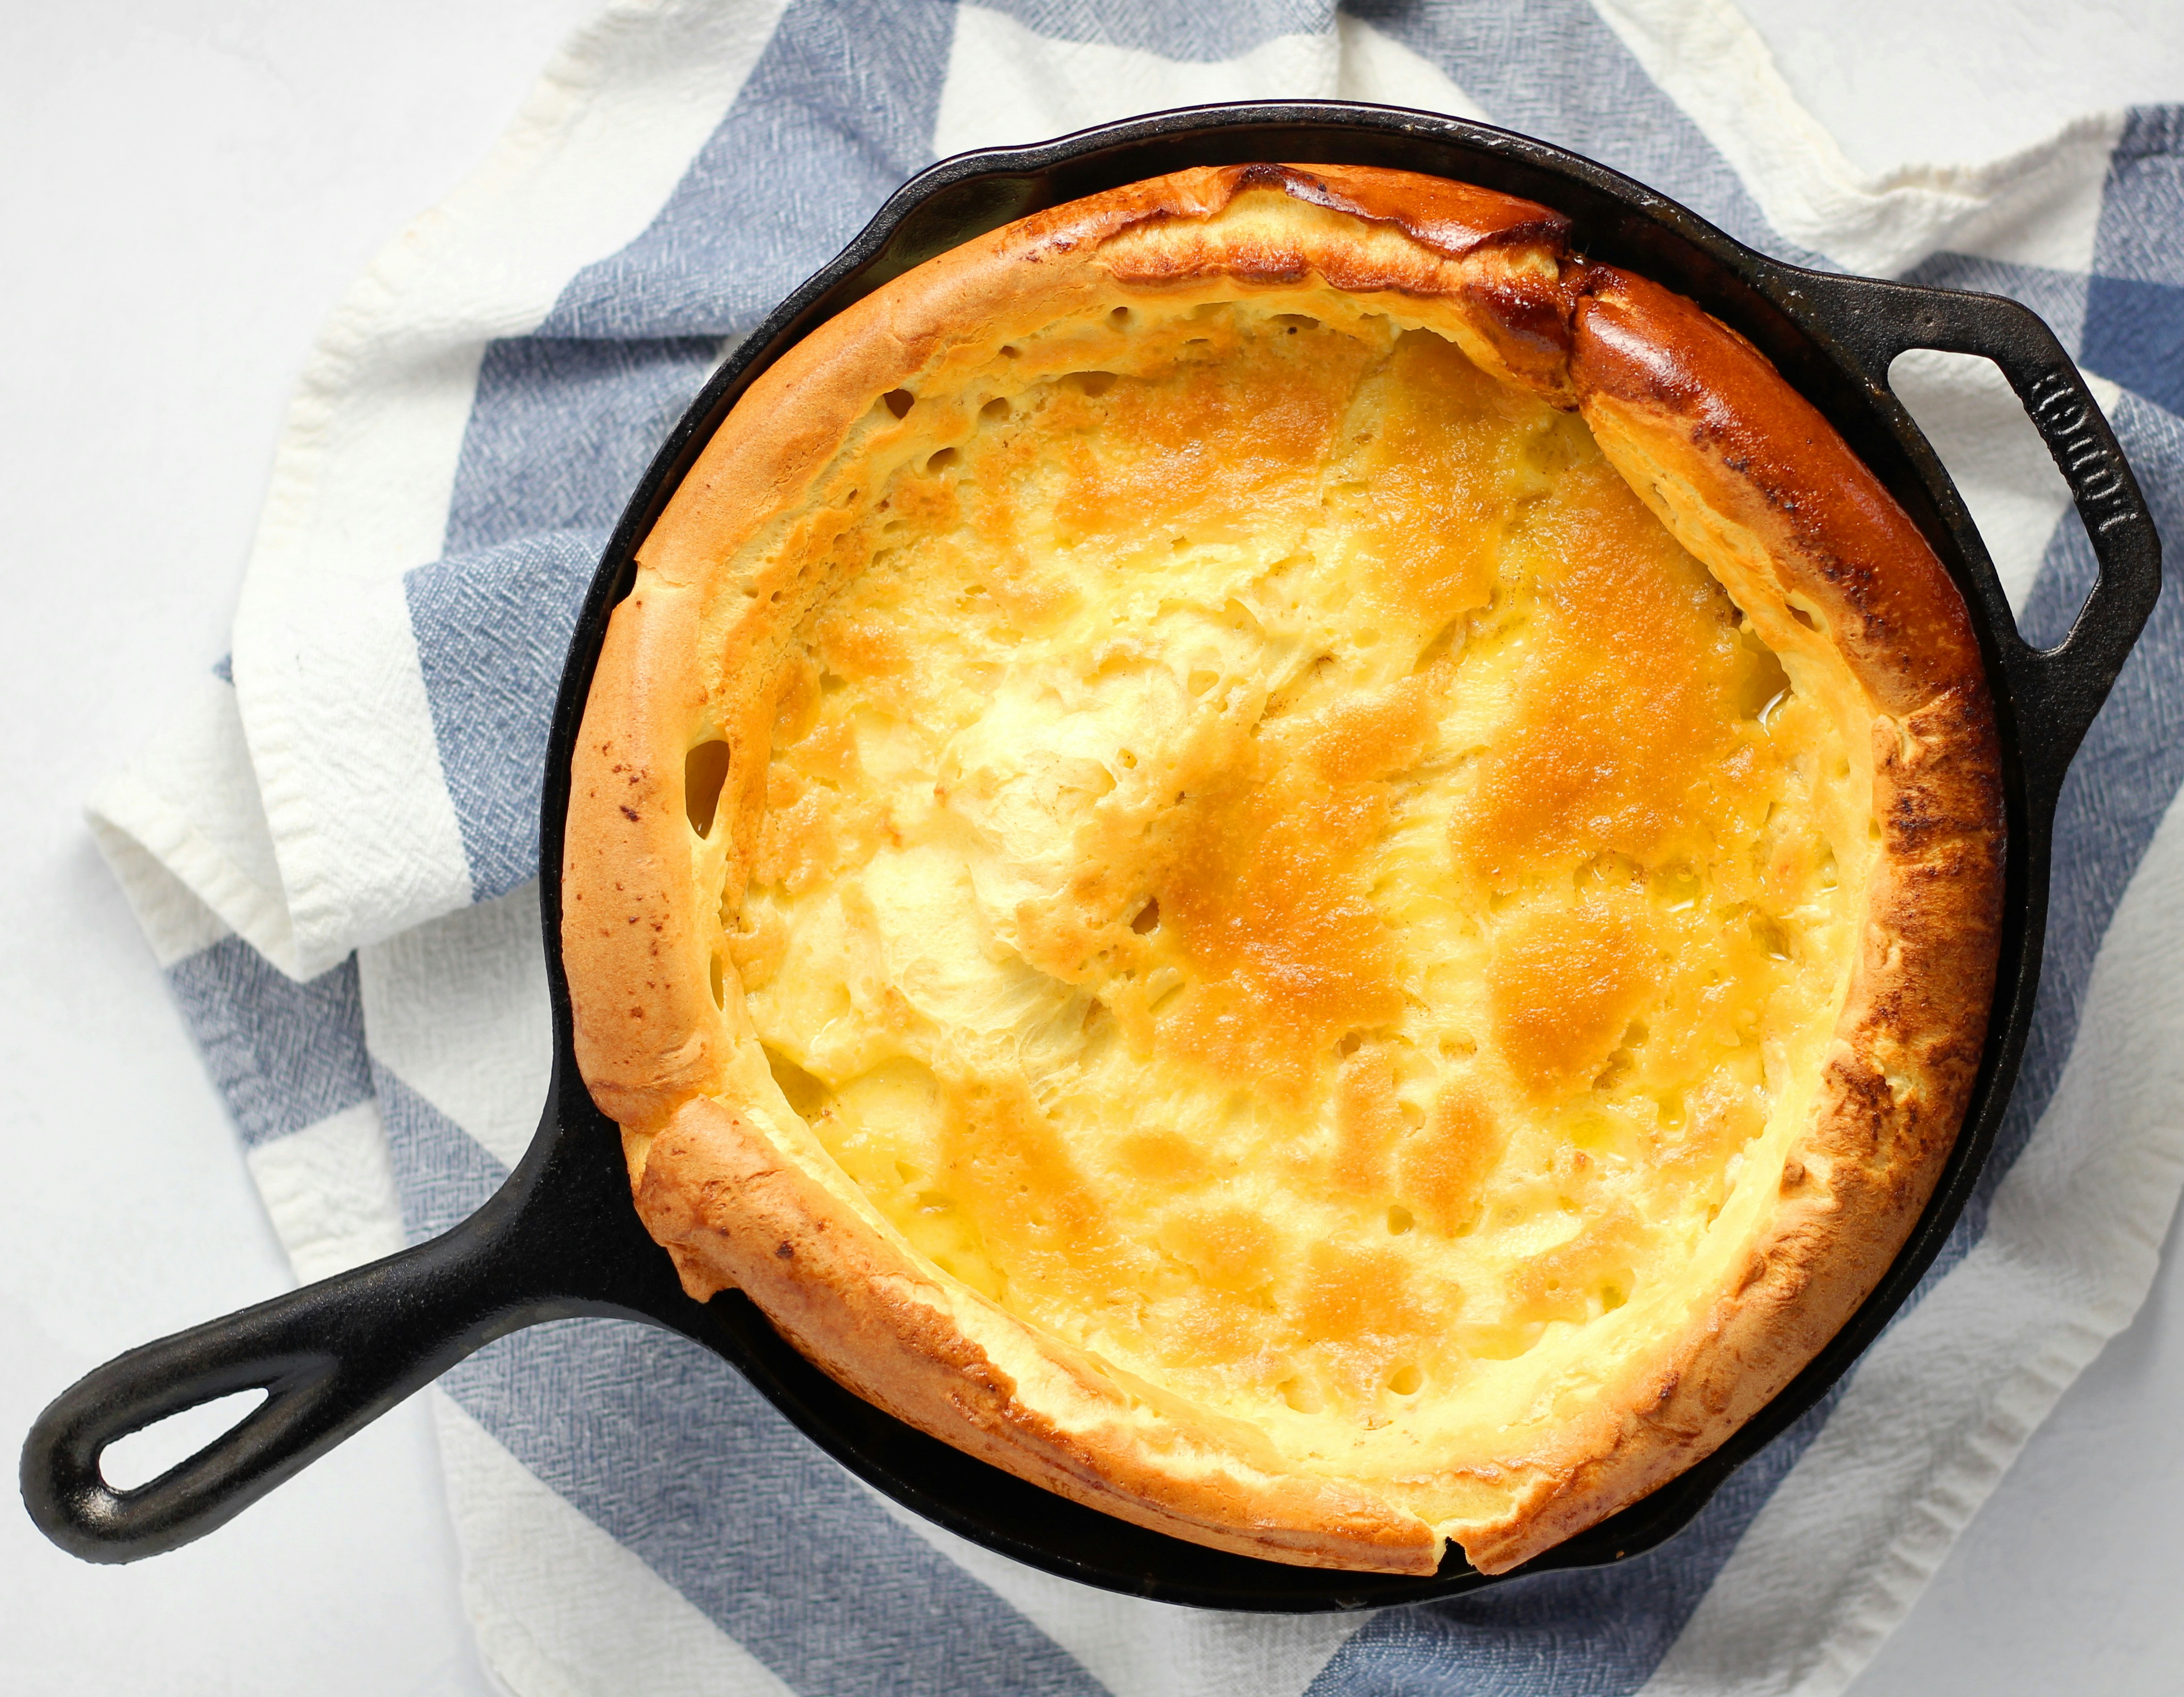 A pan with cornbread | Source: Unplash